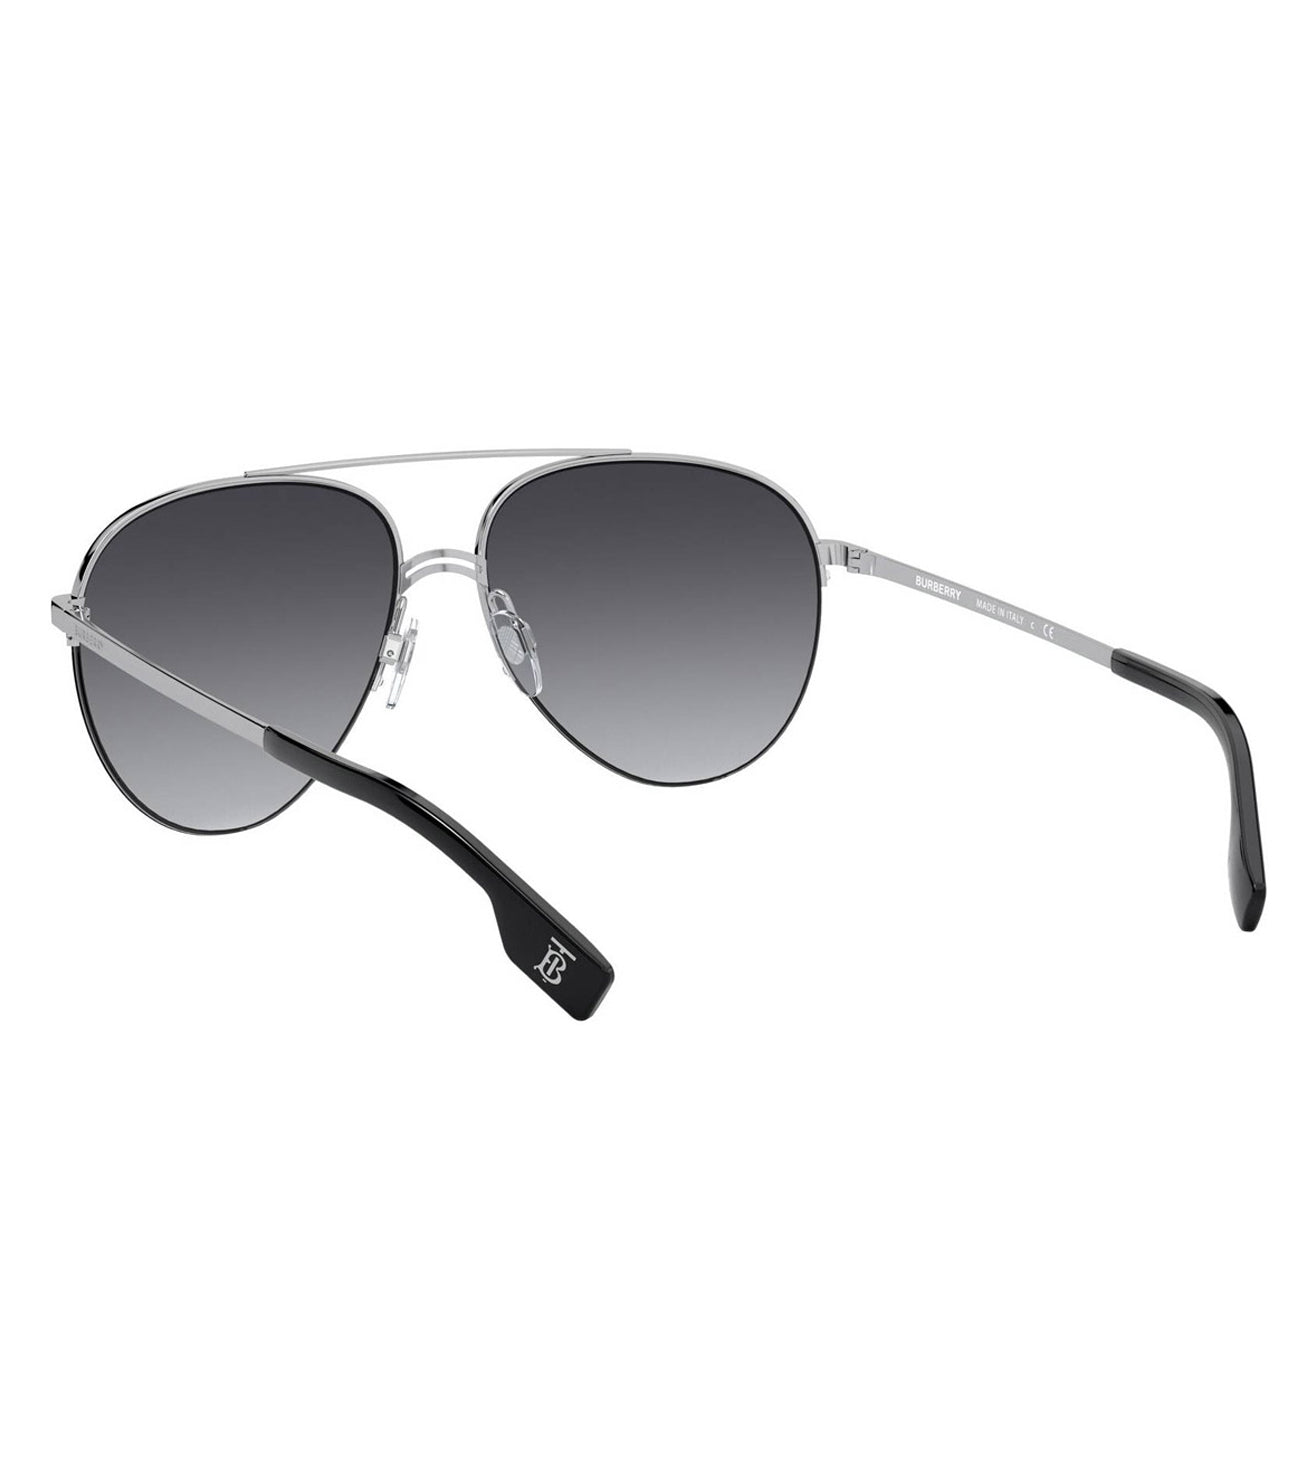 Burberry Women's Grey Gradient Aviator Sunglasses